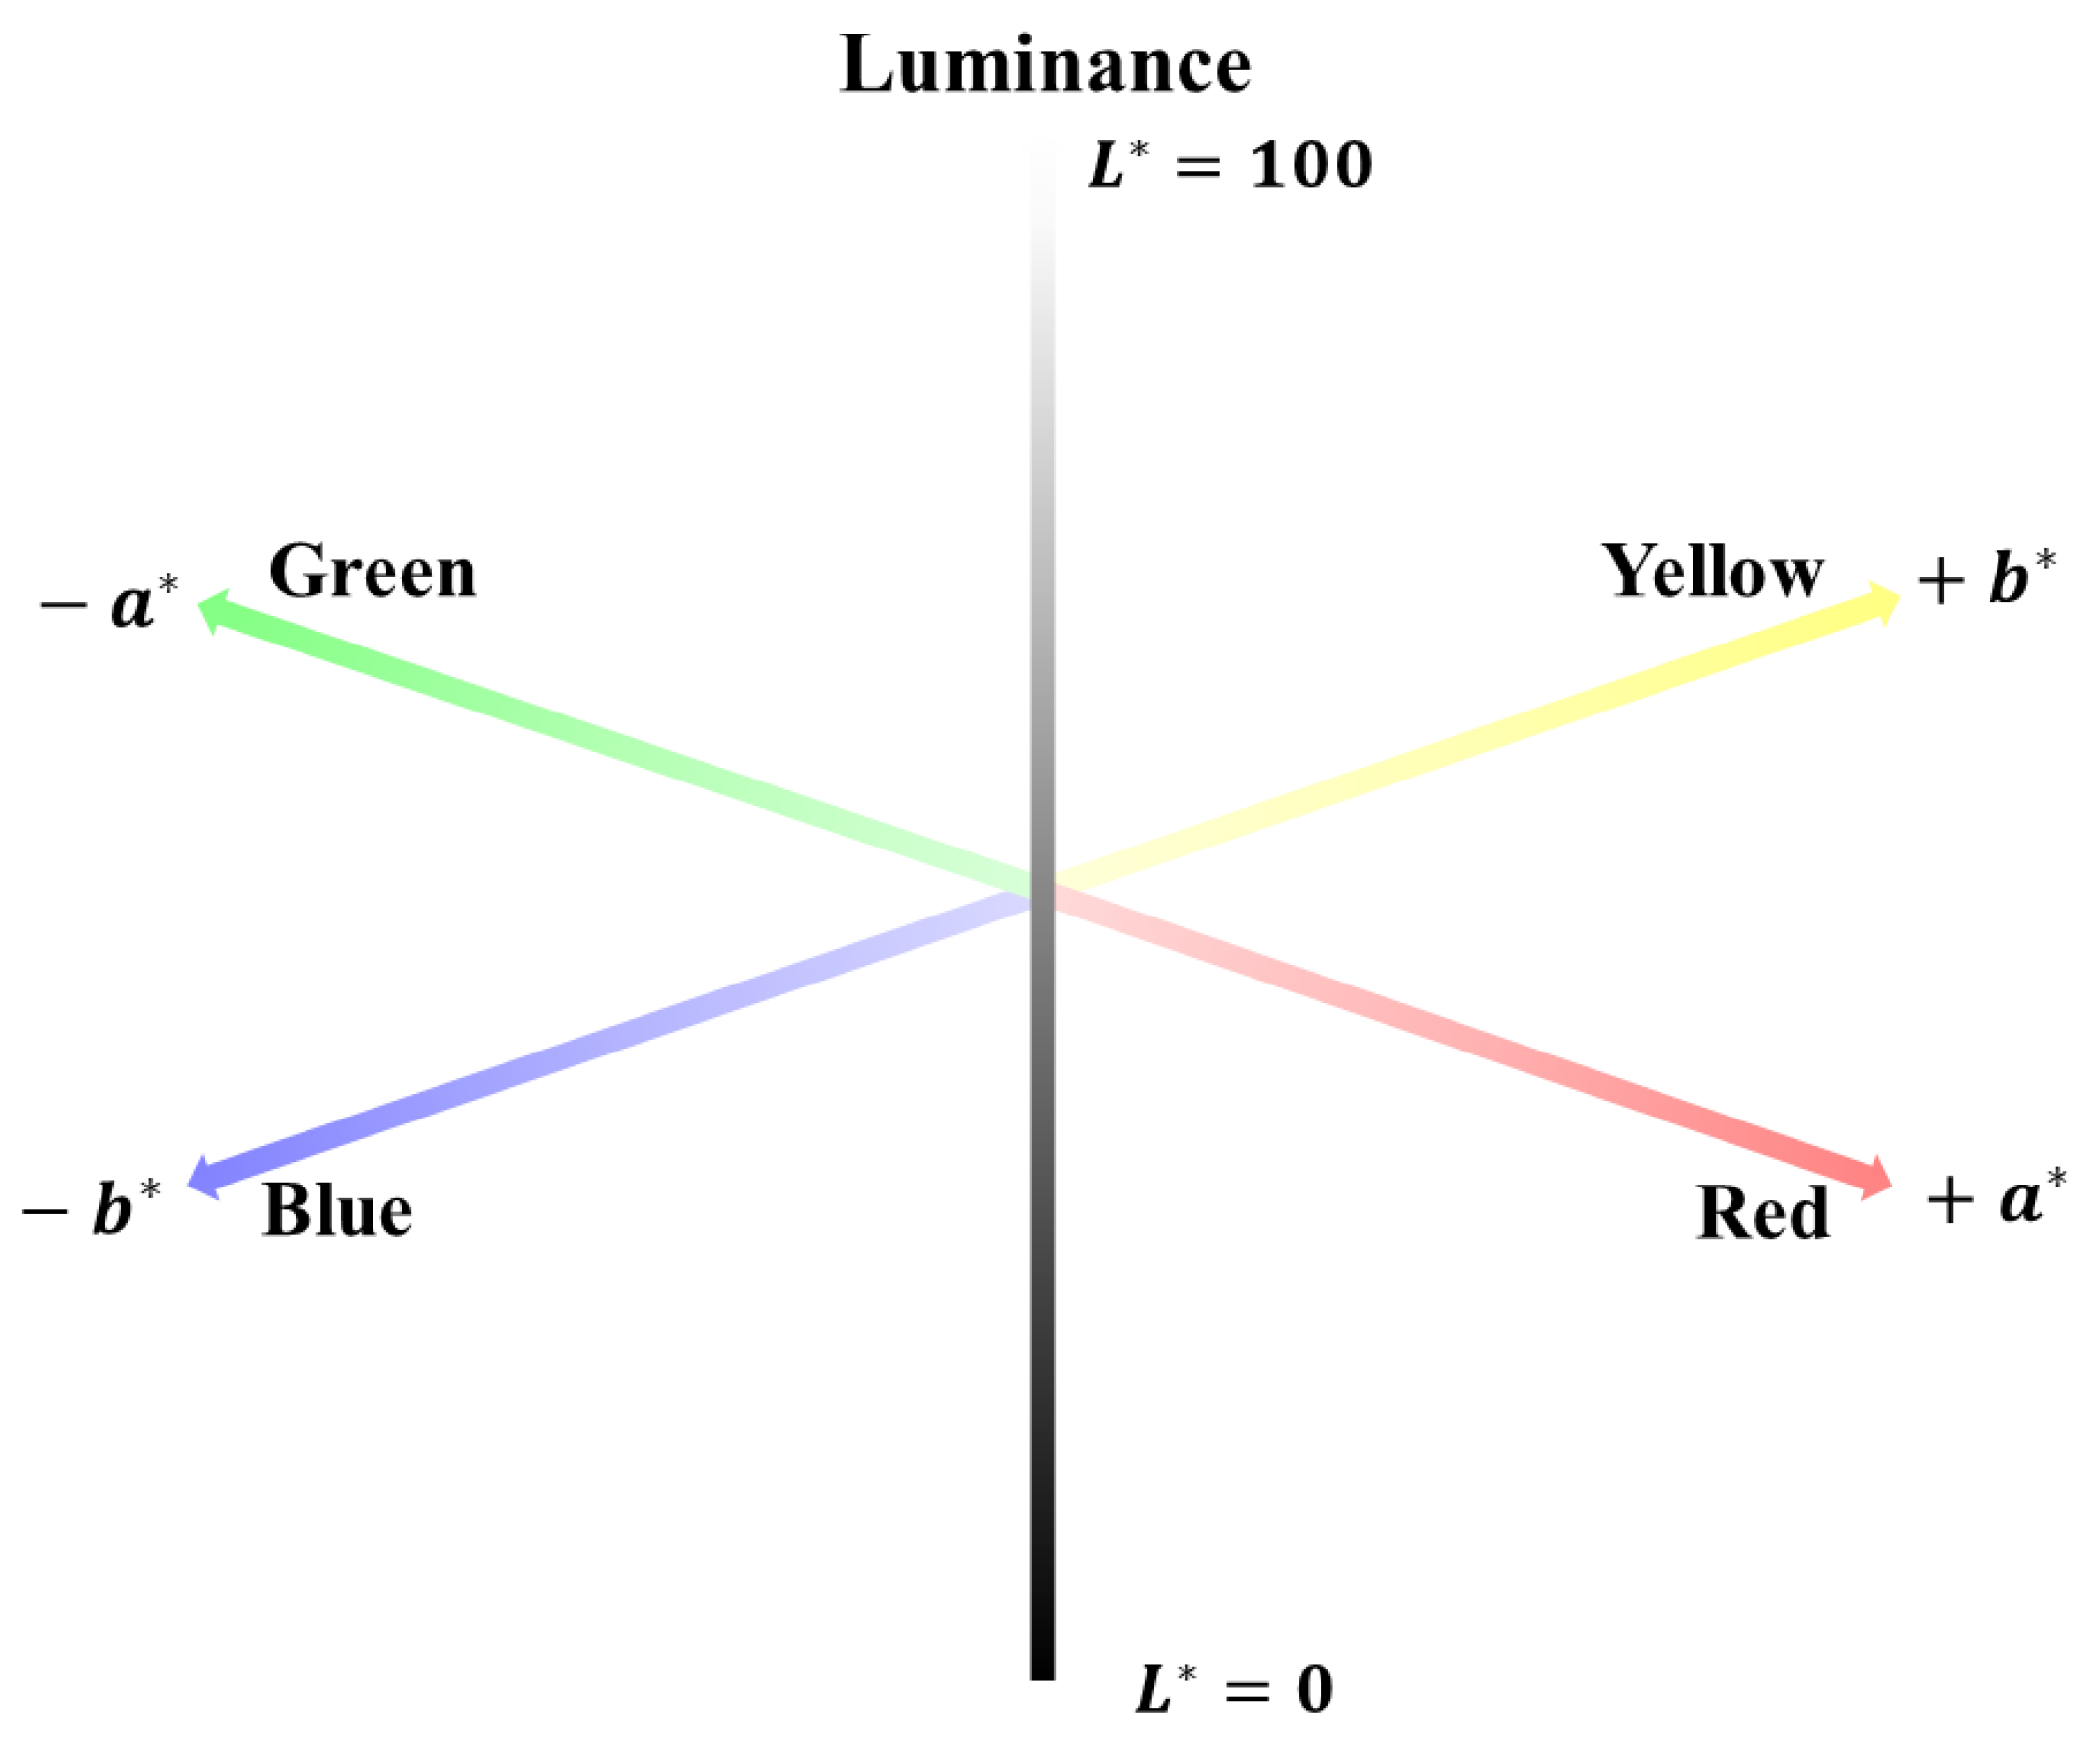 The conception of CIELAB. 1. brightness L* = 0 (black) to L* = 100